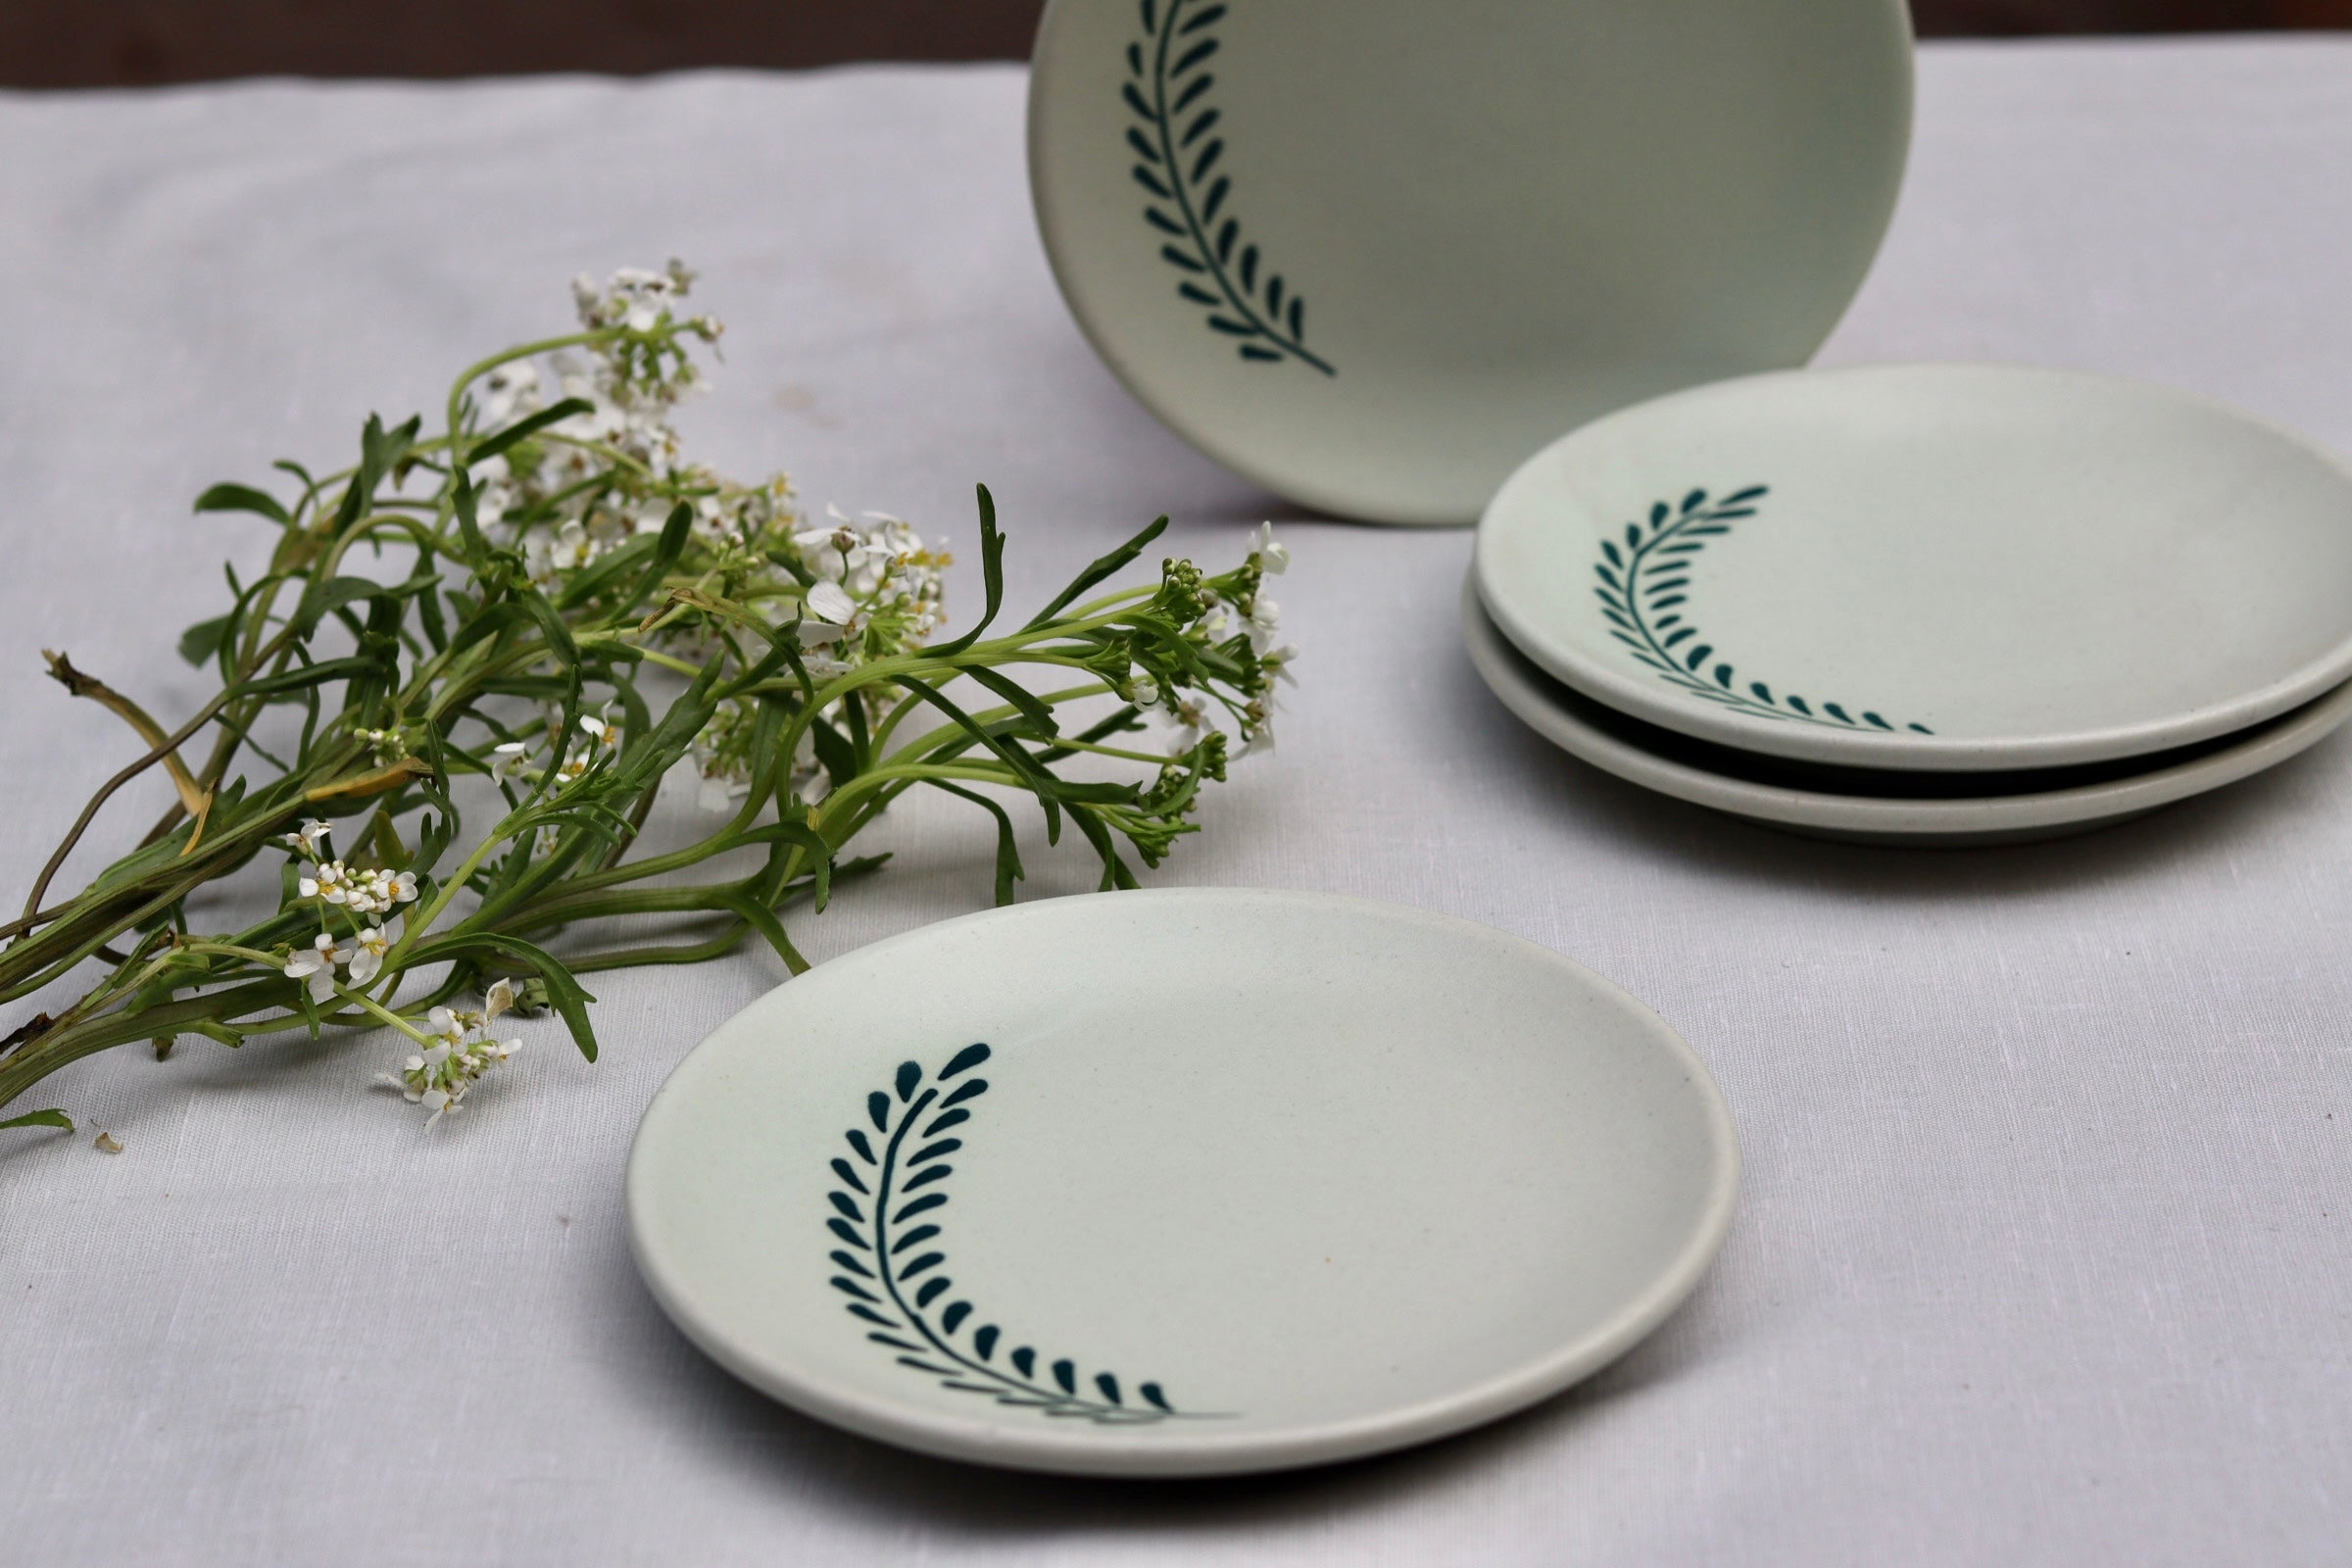 Handmade ceramic dinner plates with flowers